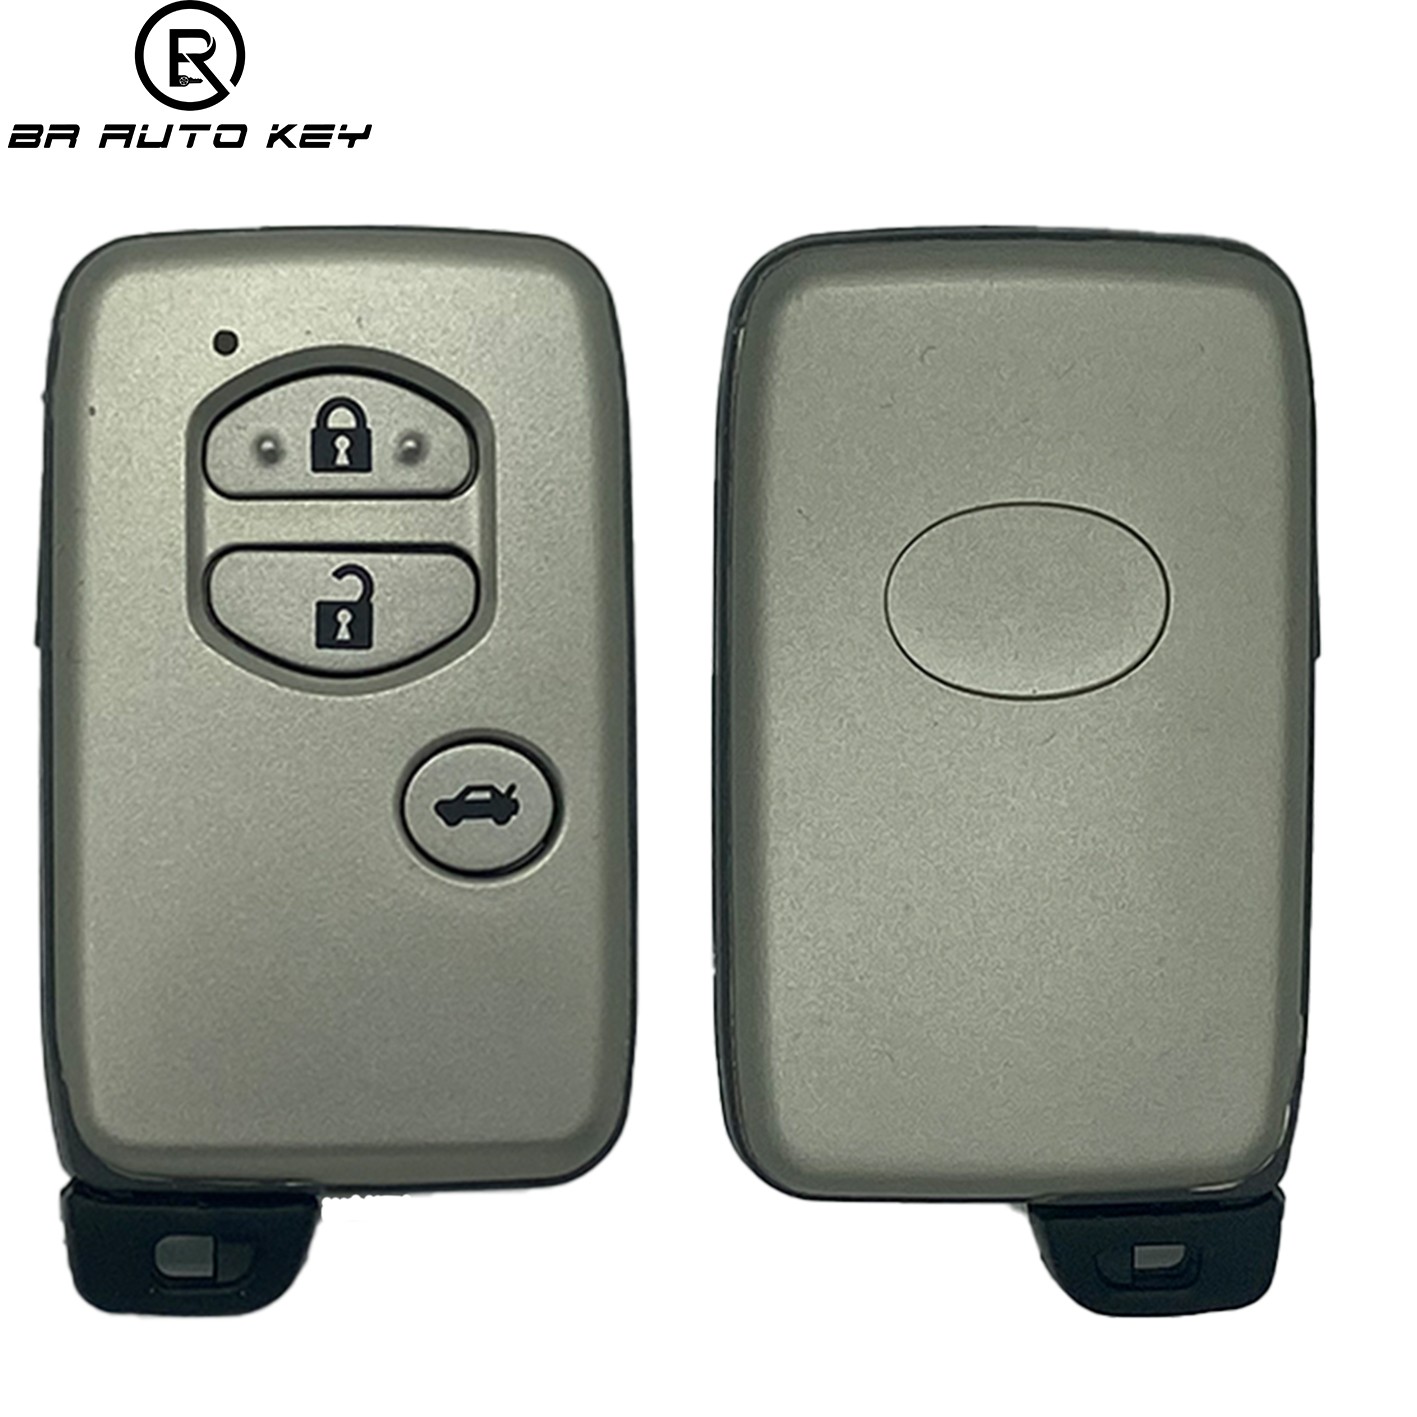 2/3 Button For Toyota Land Cruiser Prado 2010+ Keyless Go Smart Remote Key B74EA P1 98 4D-67 FCCID Chip 89904-60A50 F433